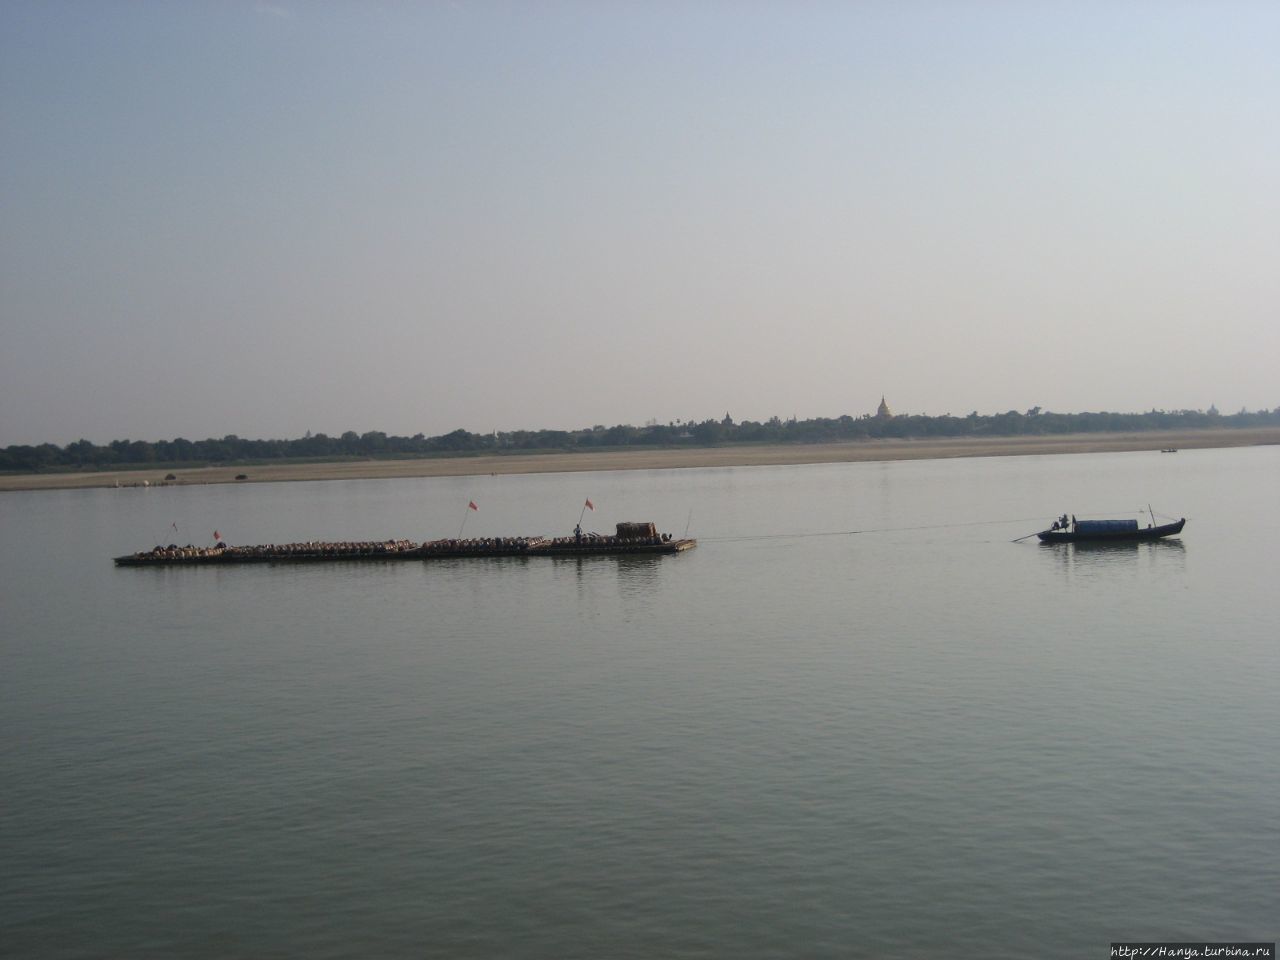 Река Иравади (Ayeyawady) Мандалай, Мьянма